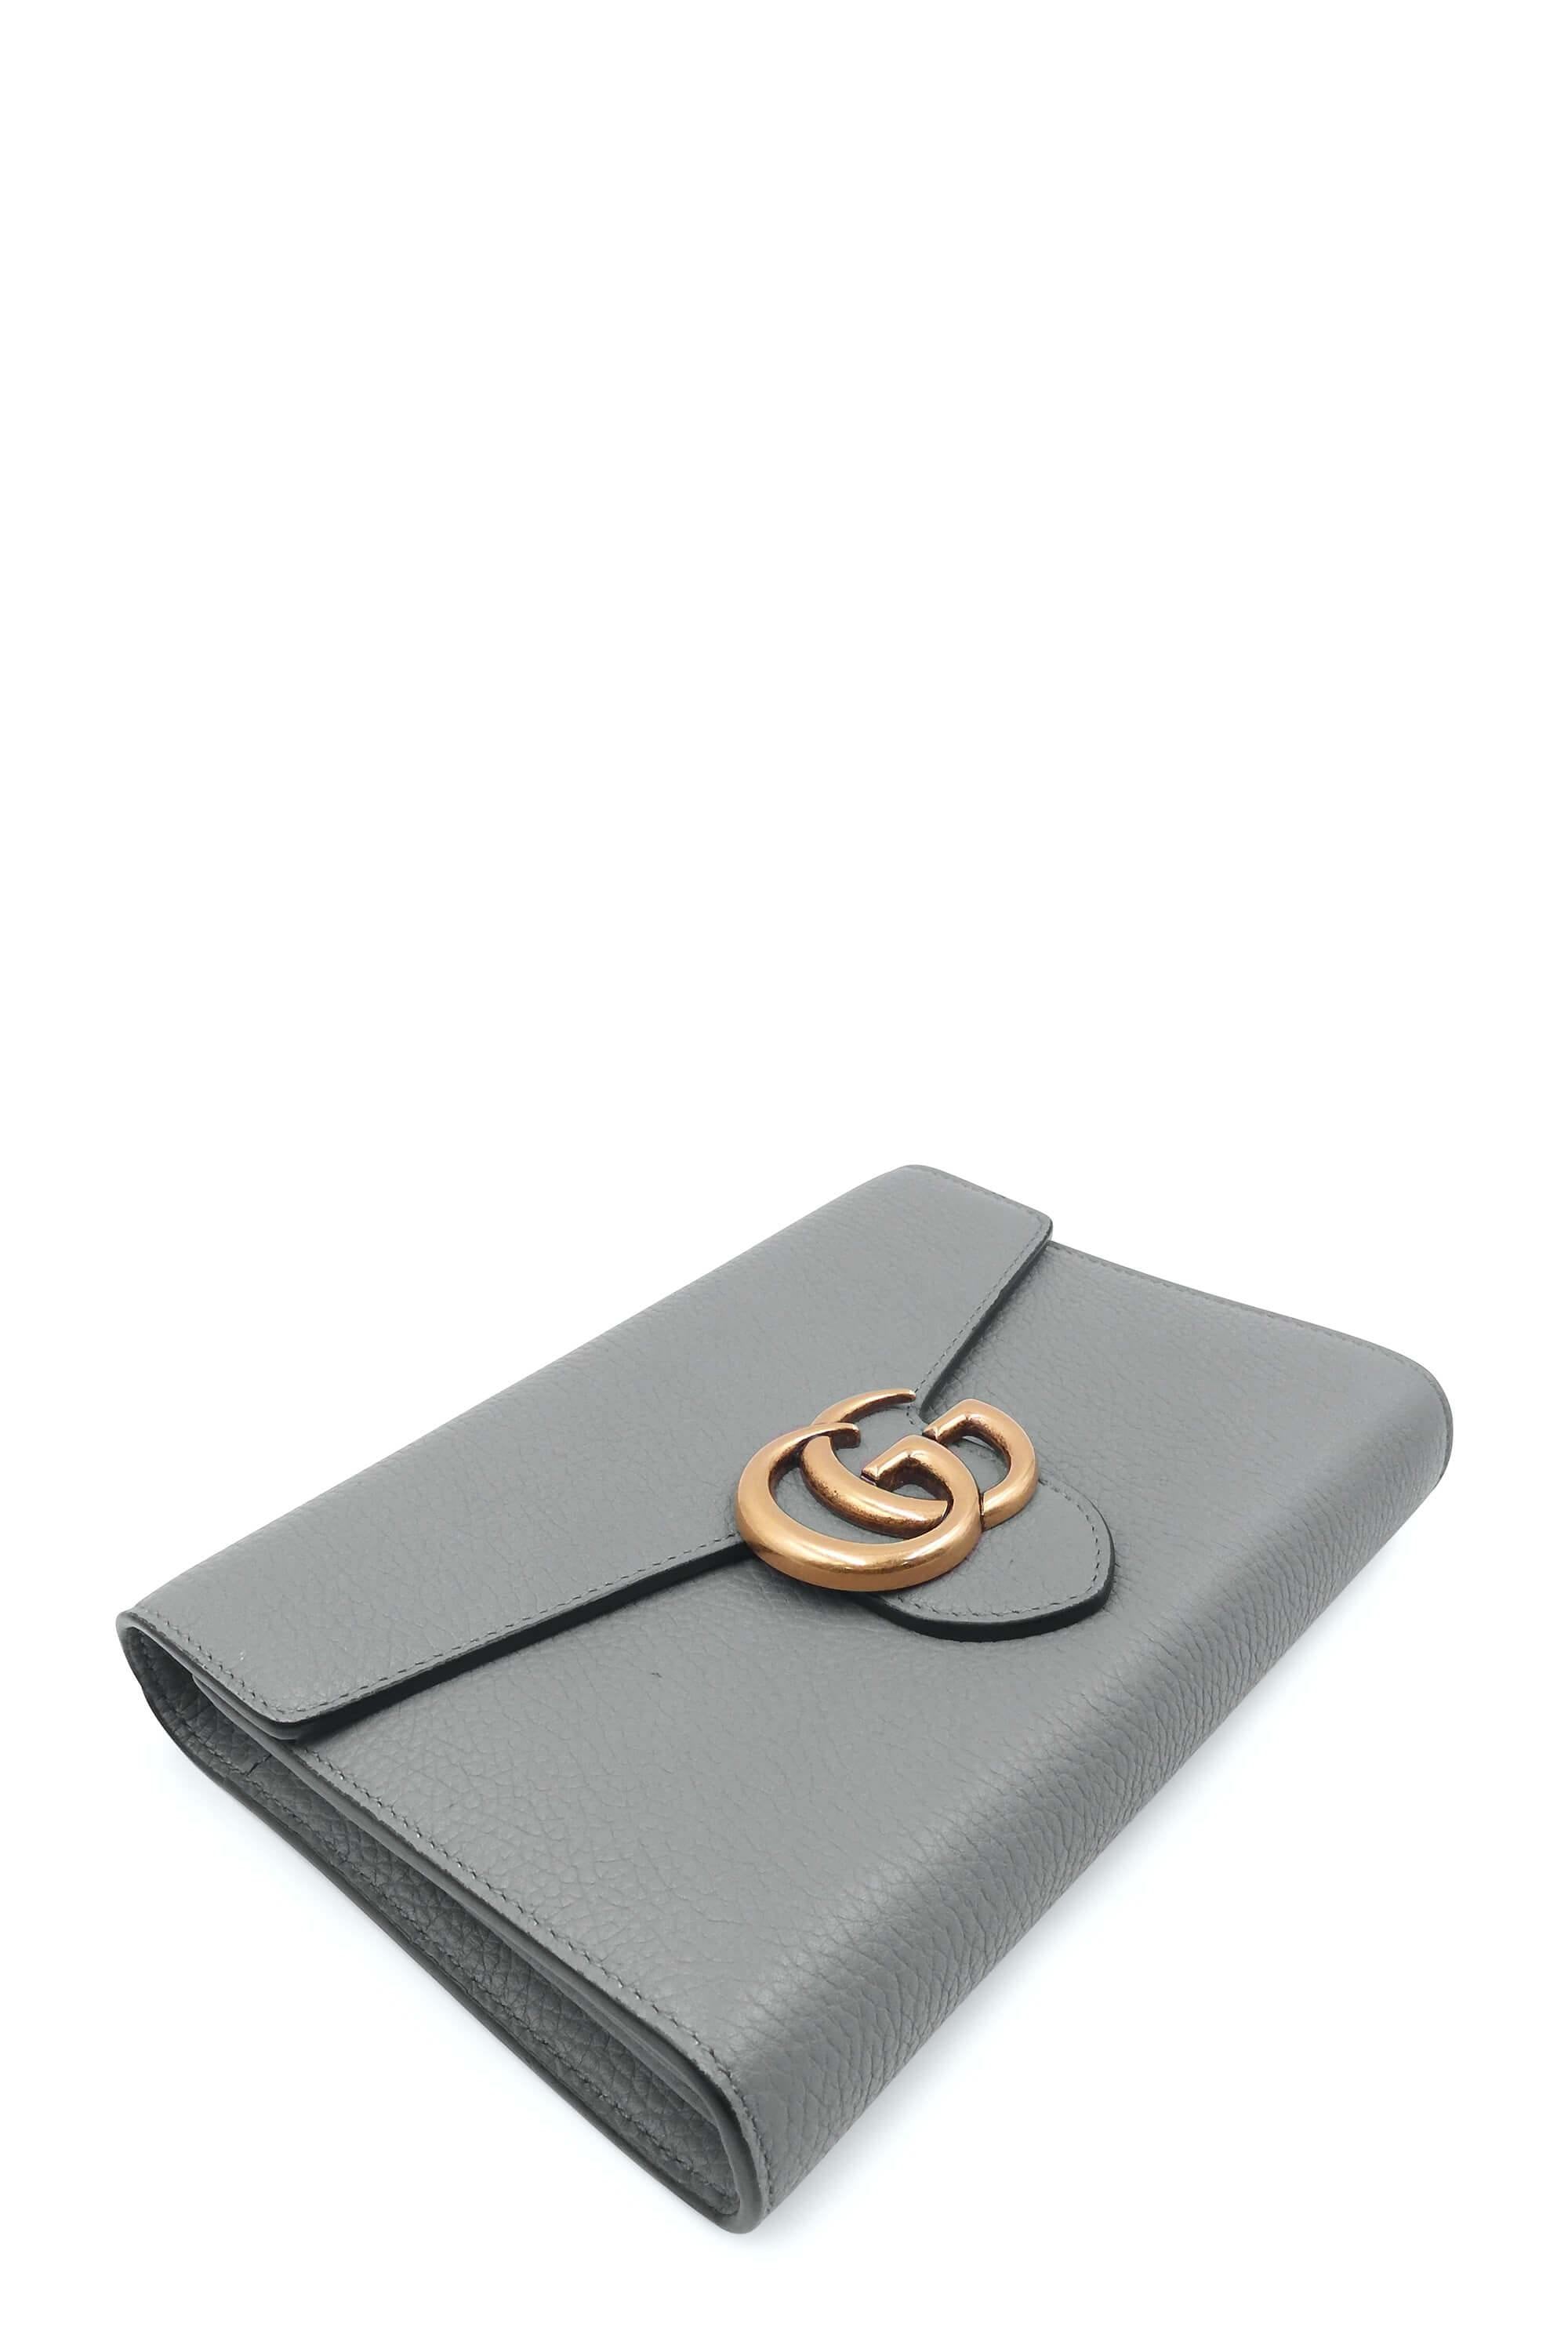 Gucci Gg Marmont Leather Mini Chain Bag in Gray